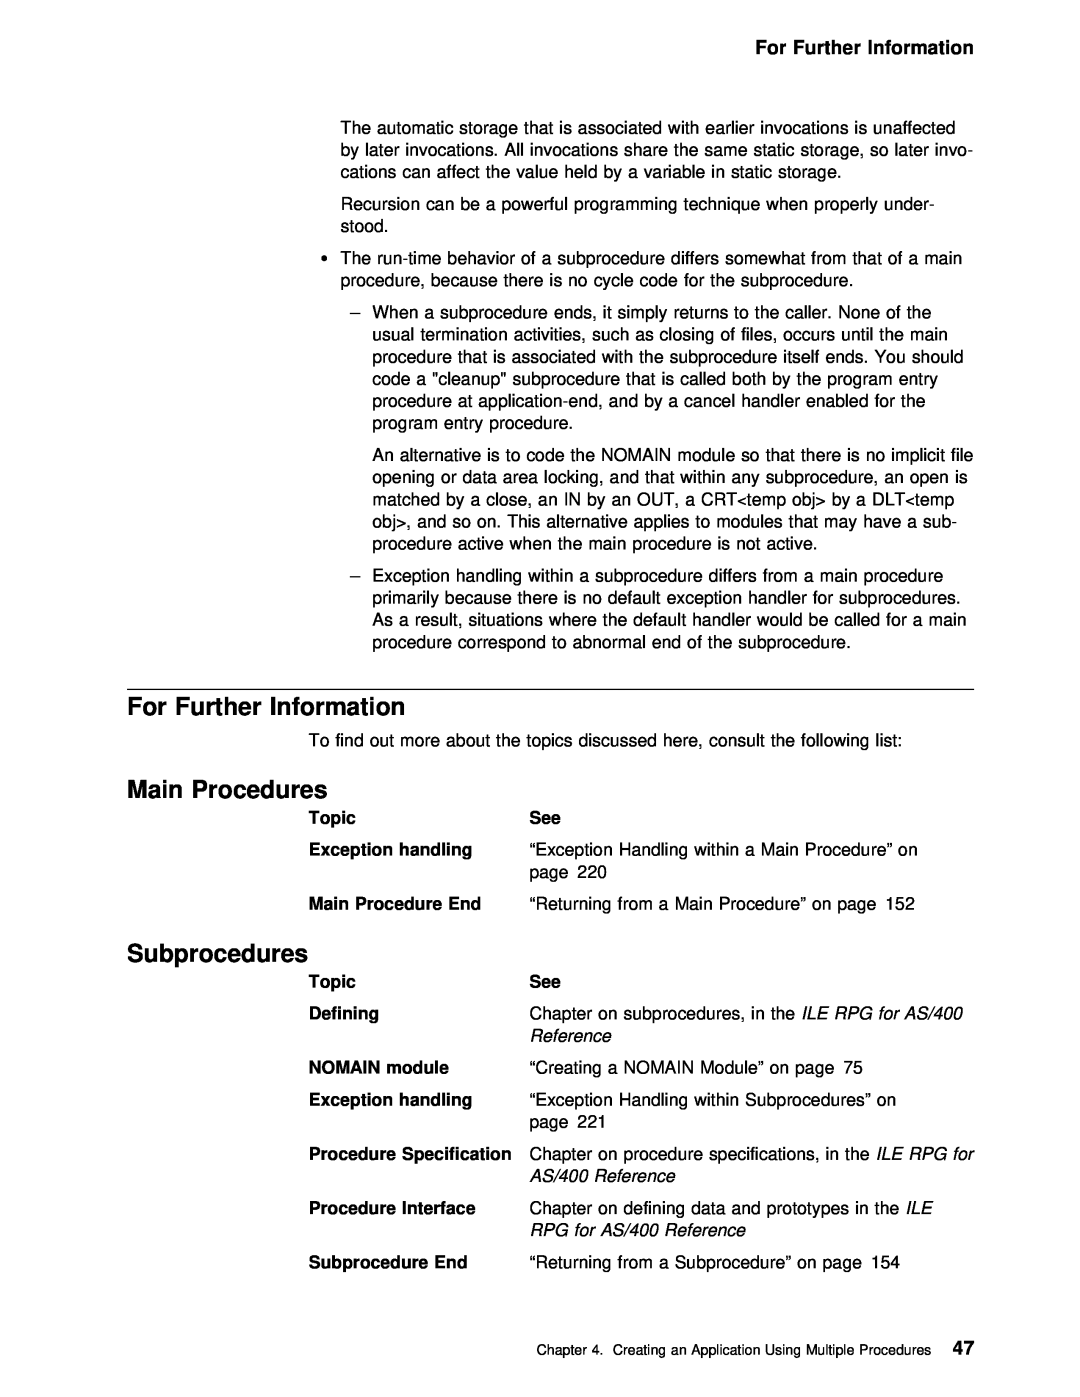 IBM AS/400 manual For Further Information, Main Procedures, Subprocedures 